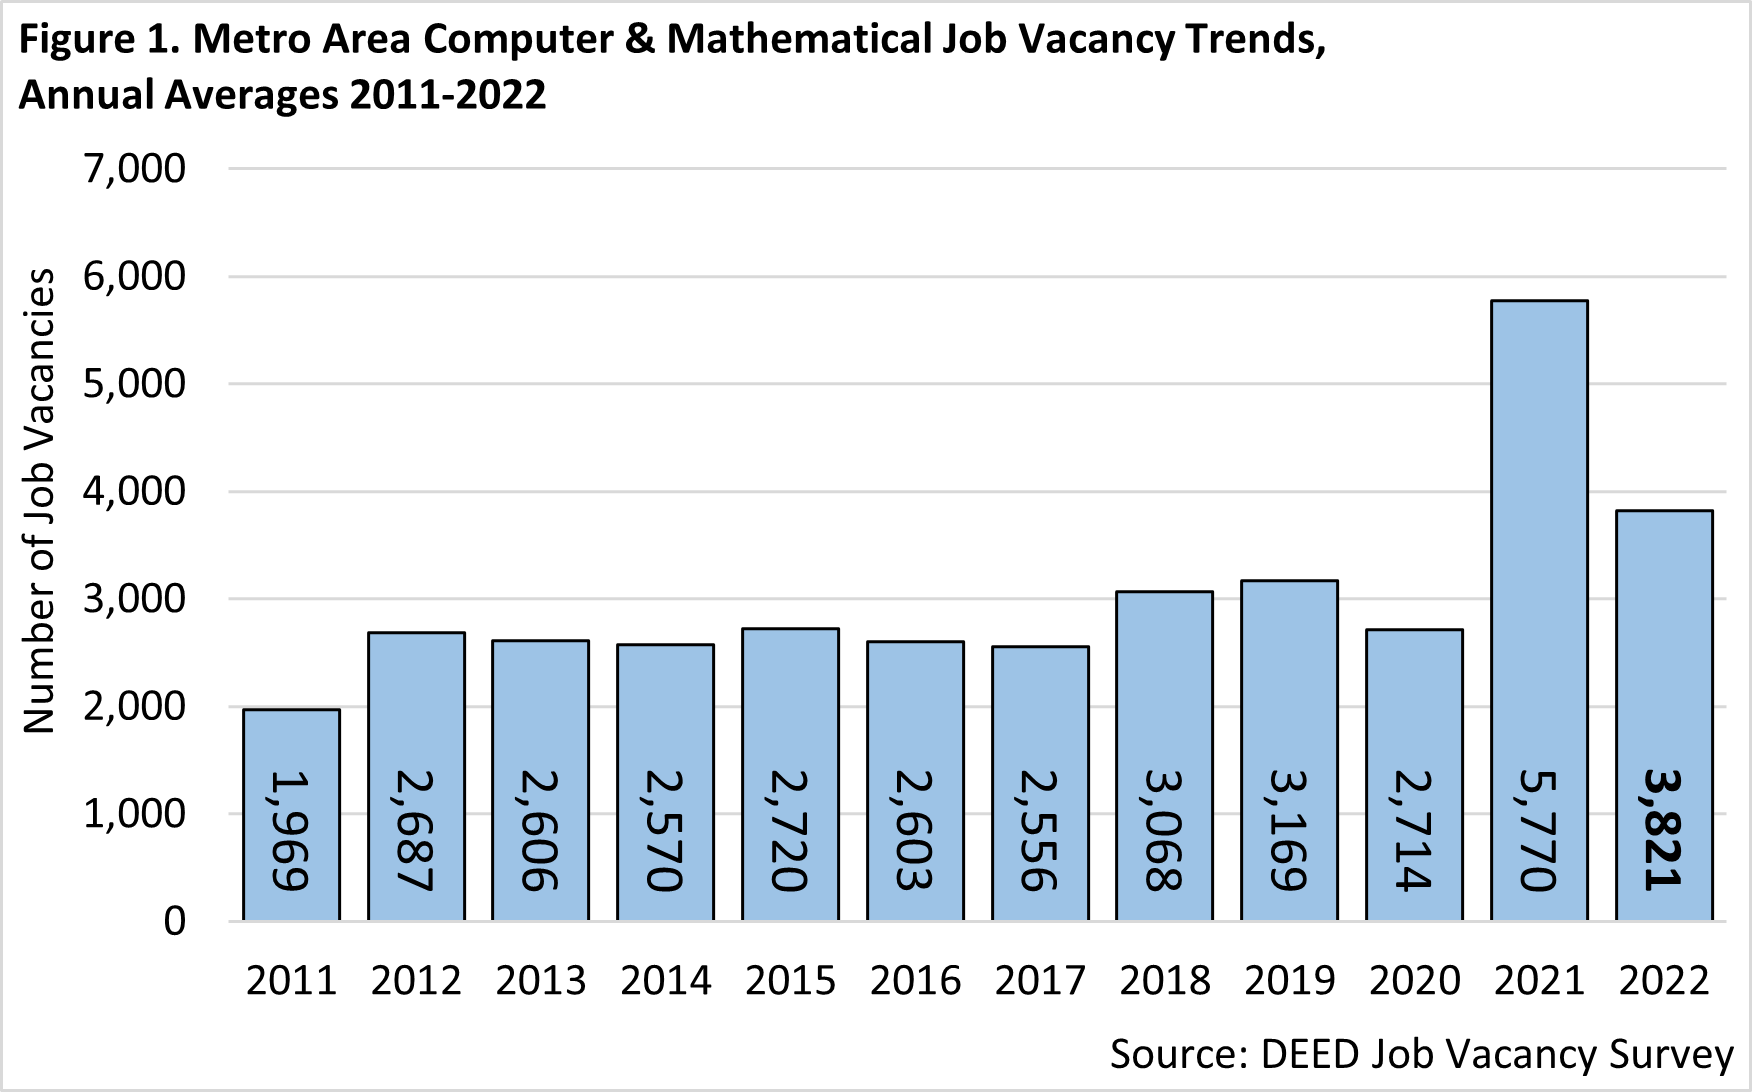 Metro Area Computer and Mathematical Job Vacancy Trends